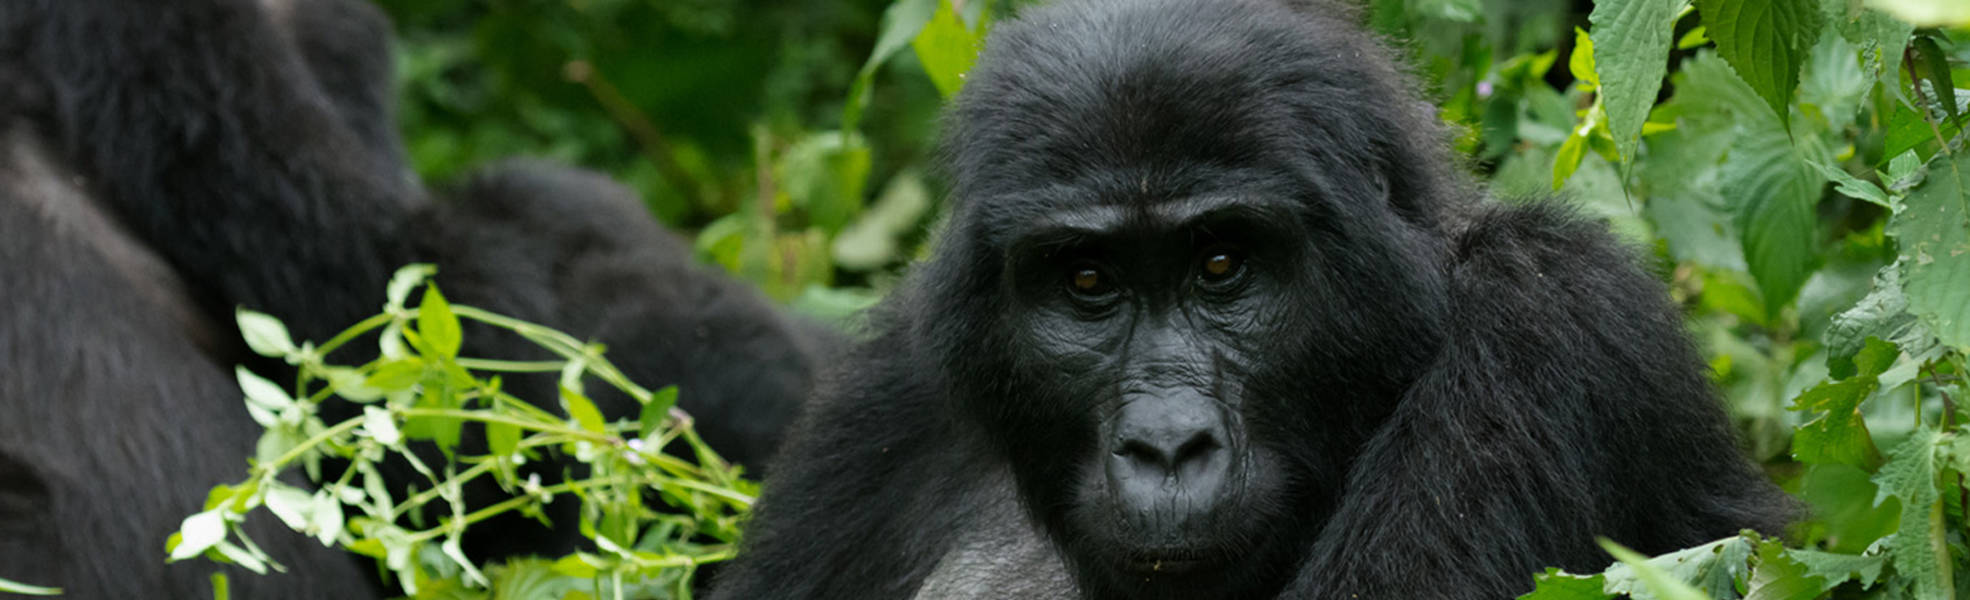 Volunteering with gorillas in Uganda